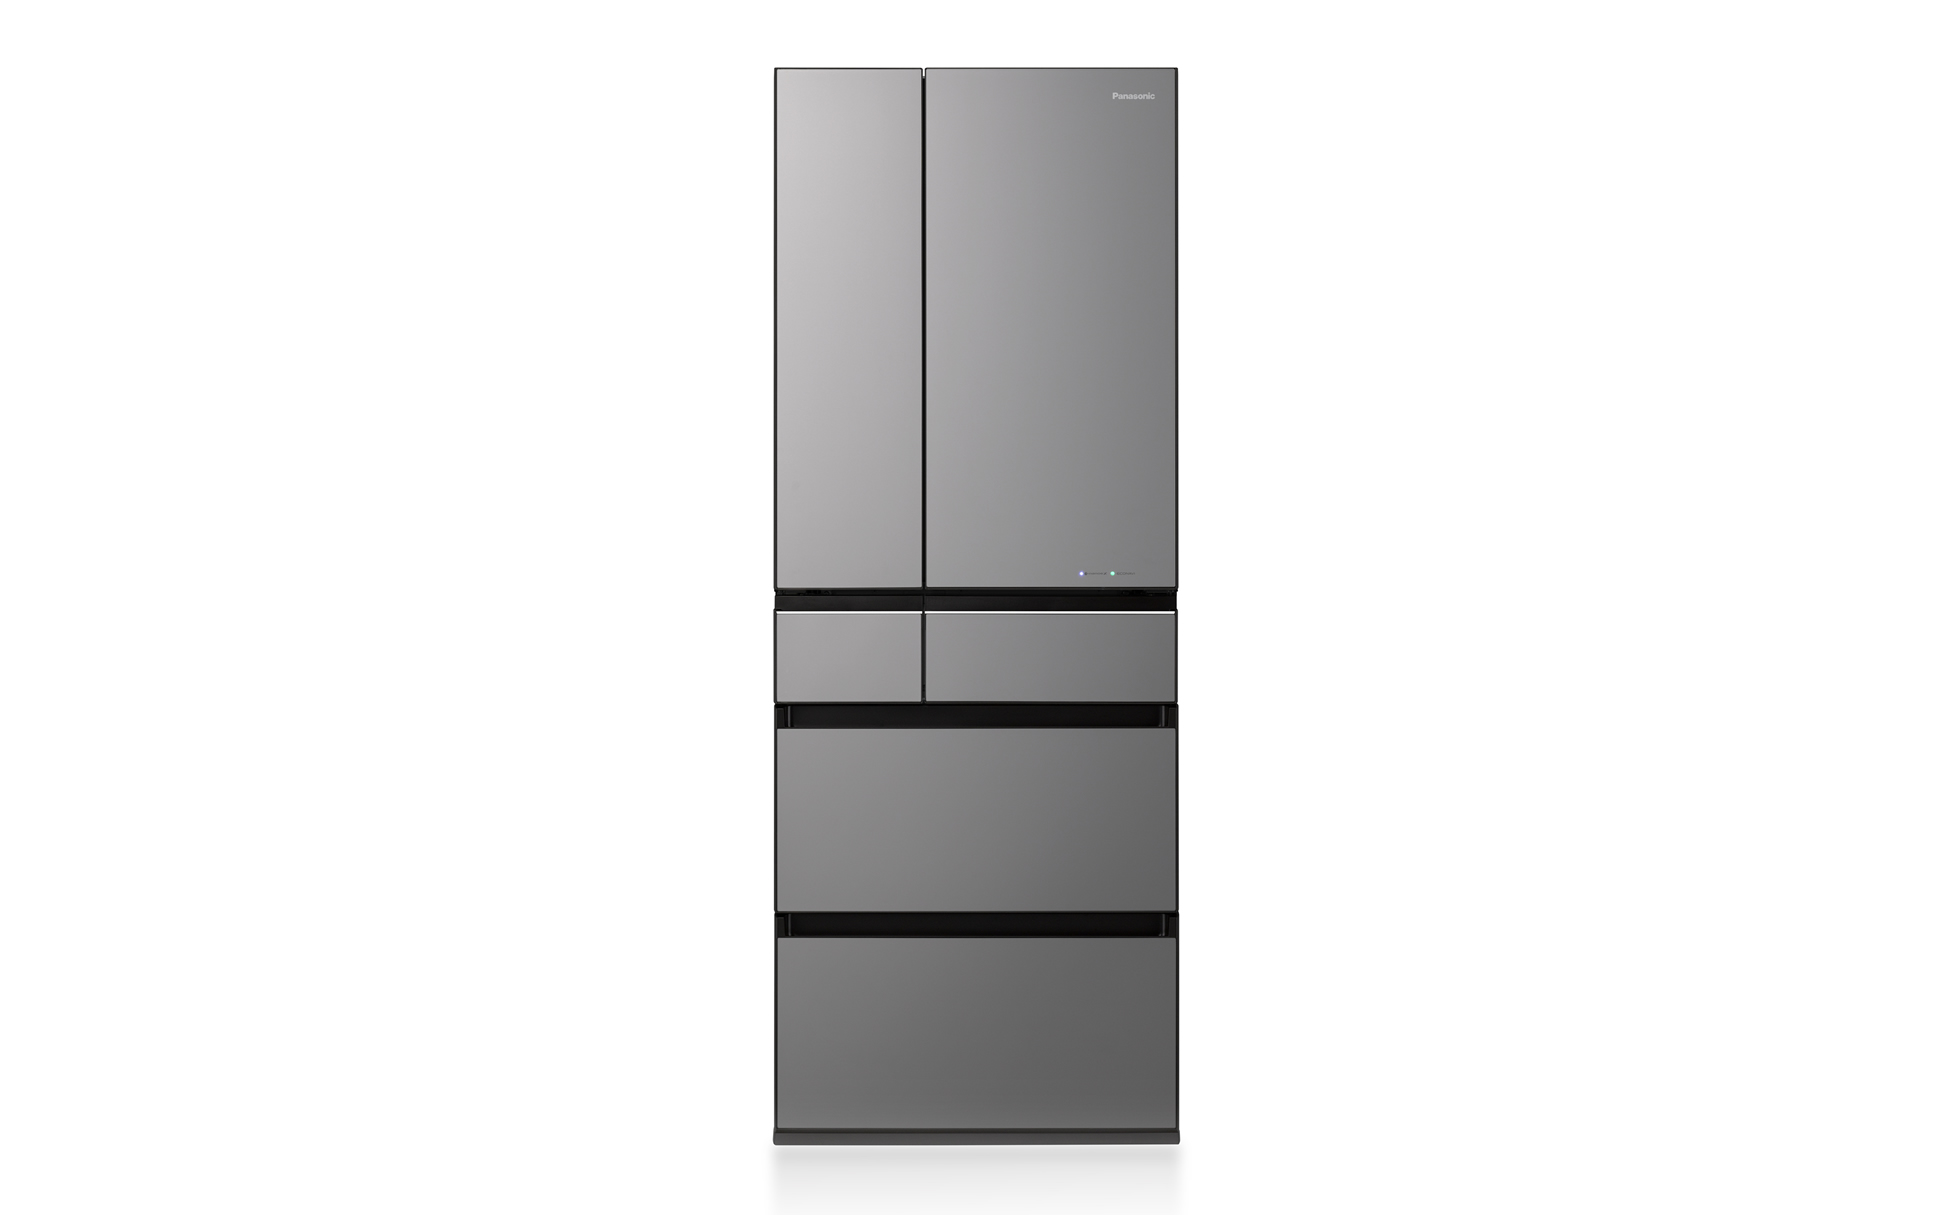 Panasonic Refrigerator Table and Gas 『サイバーパンク - www